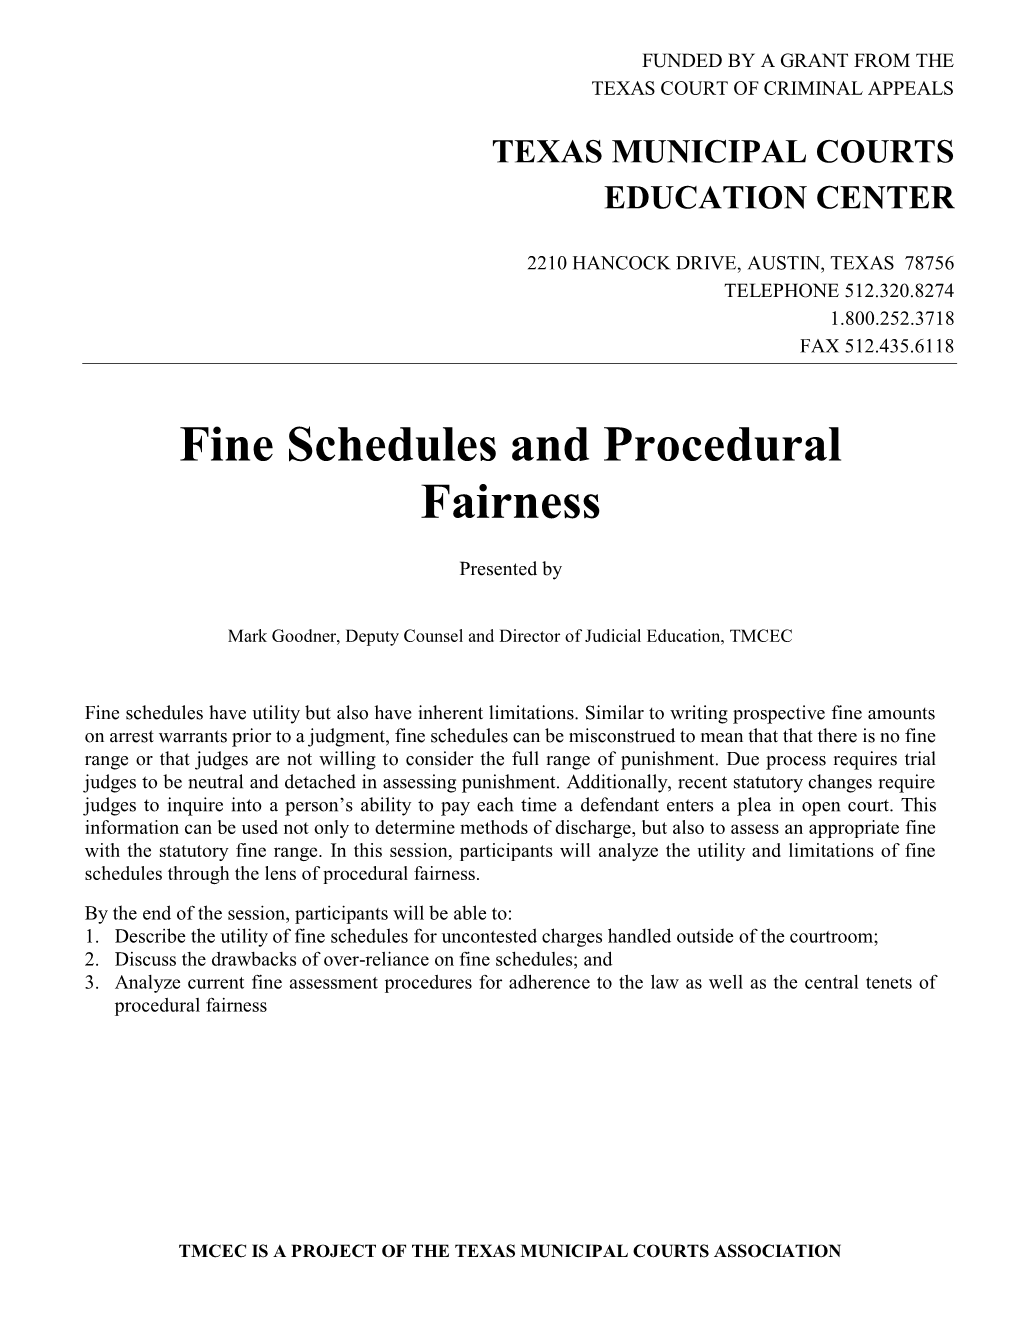 Fine Schedules and Procedural Fairness